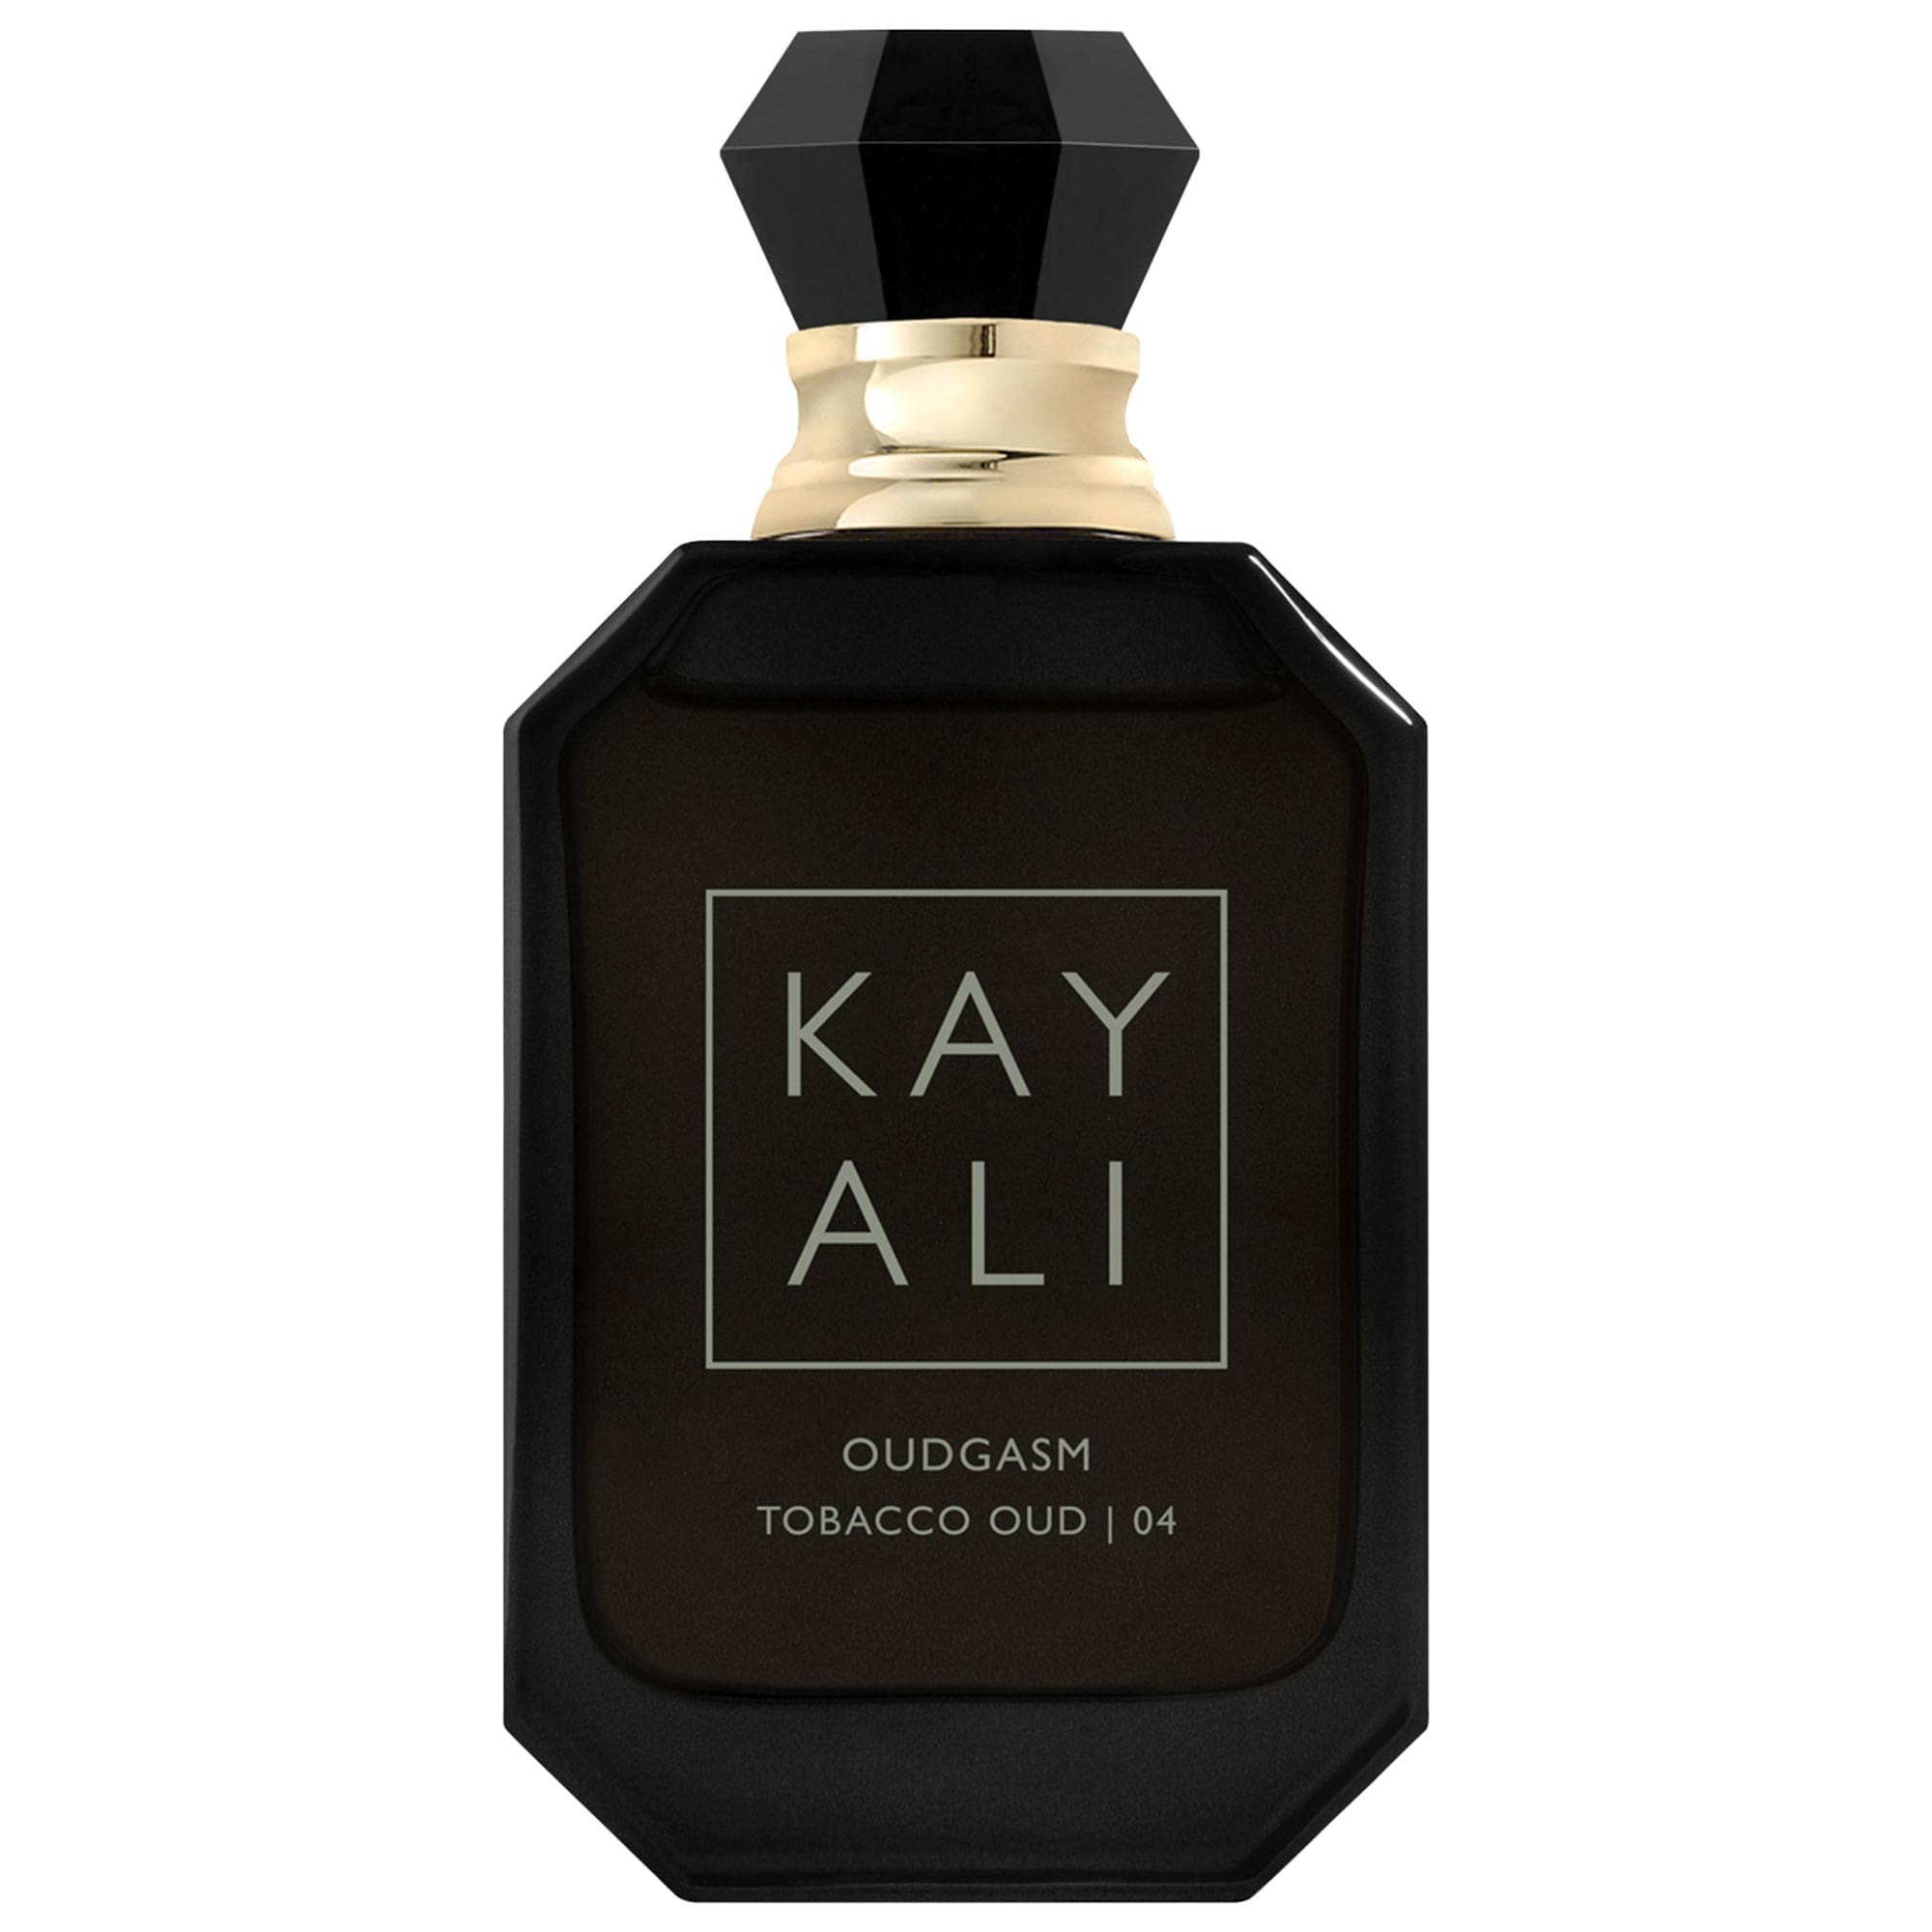 Kayali Oudgasm Tobacco Oud | 04 Eau de Parfum Intense 50 mL